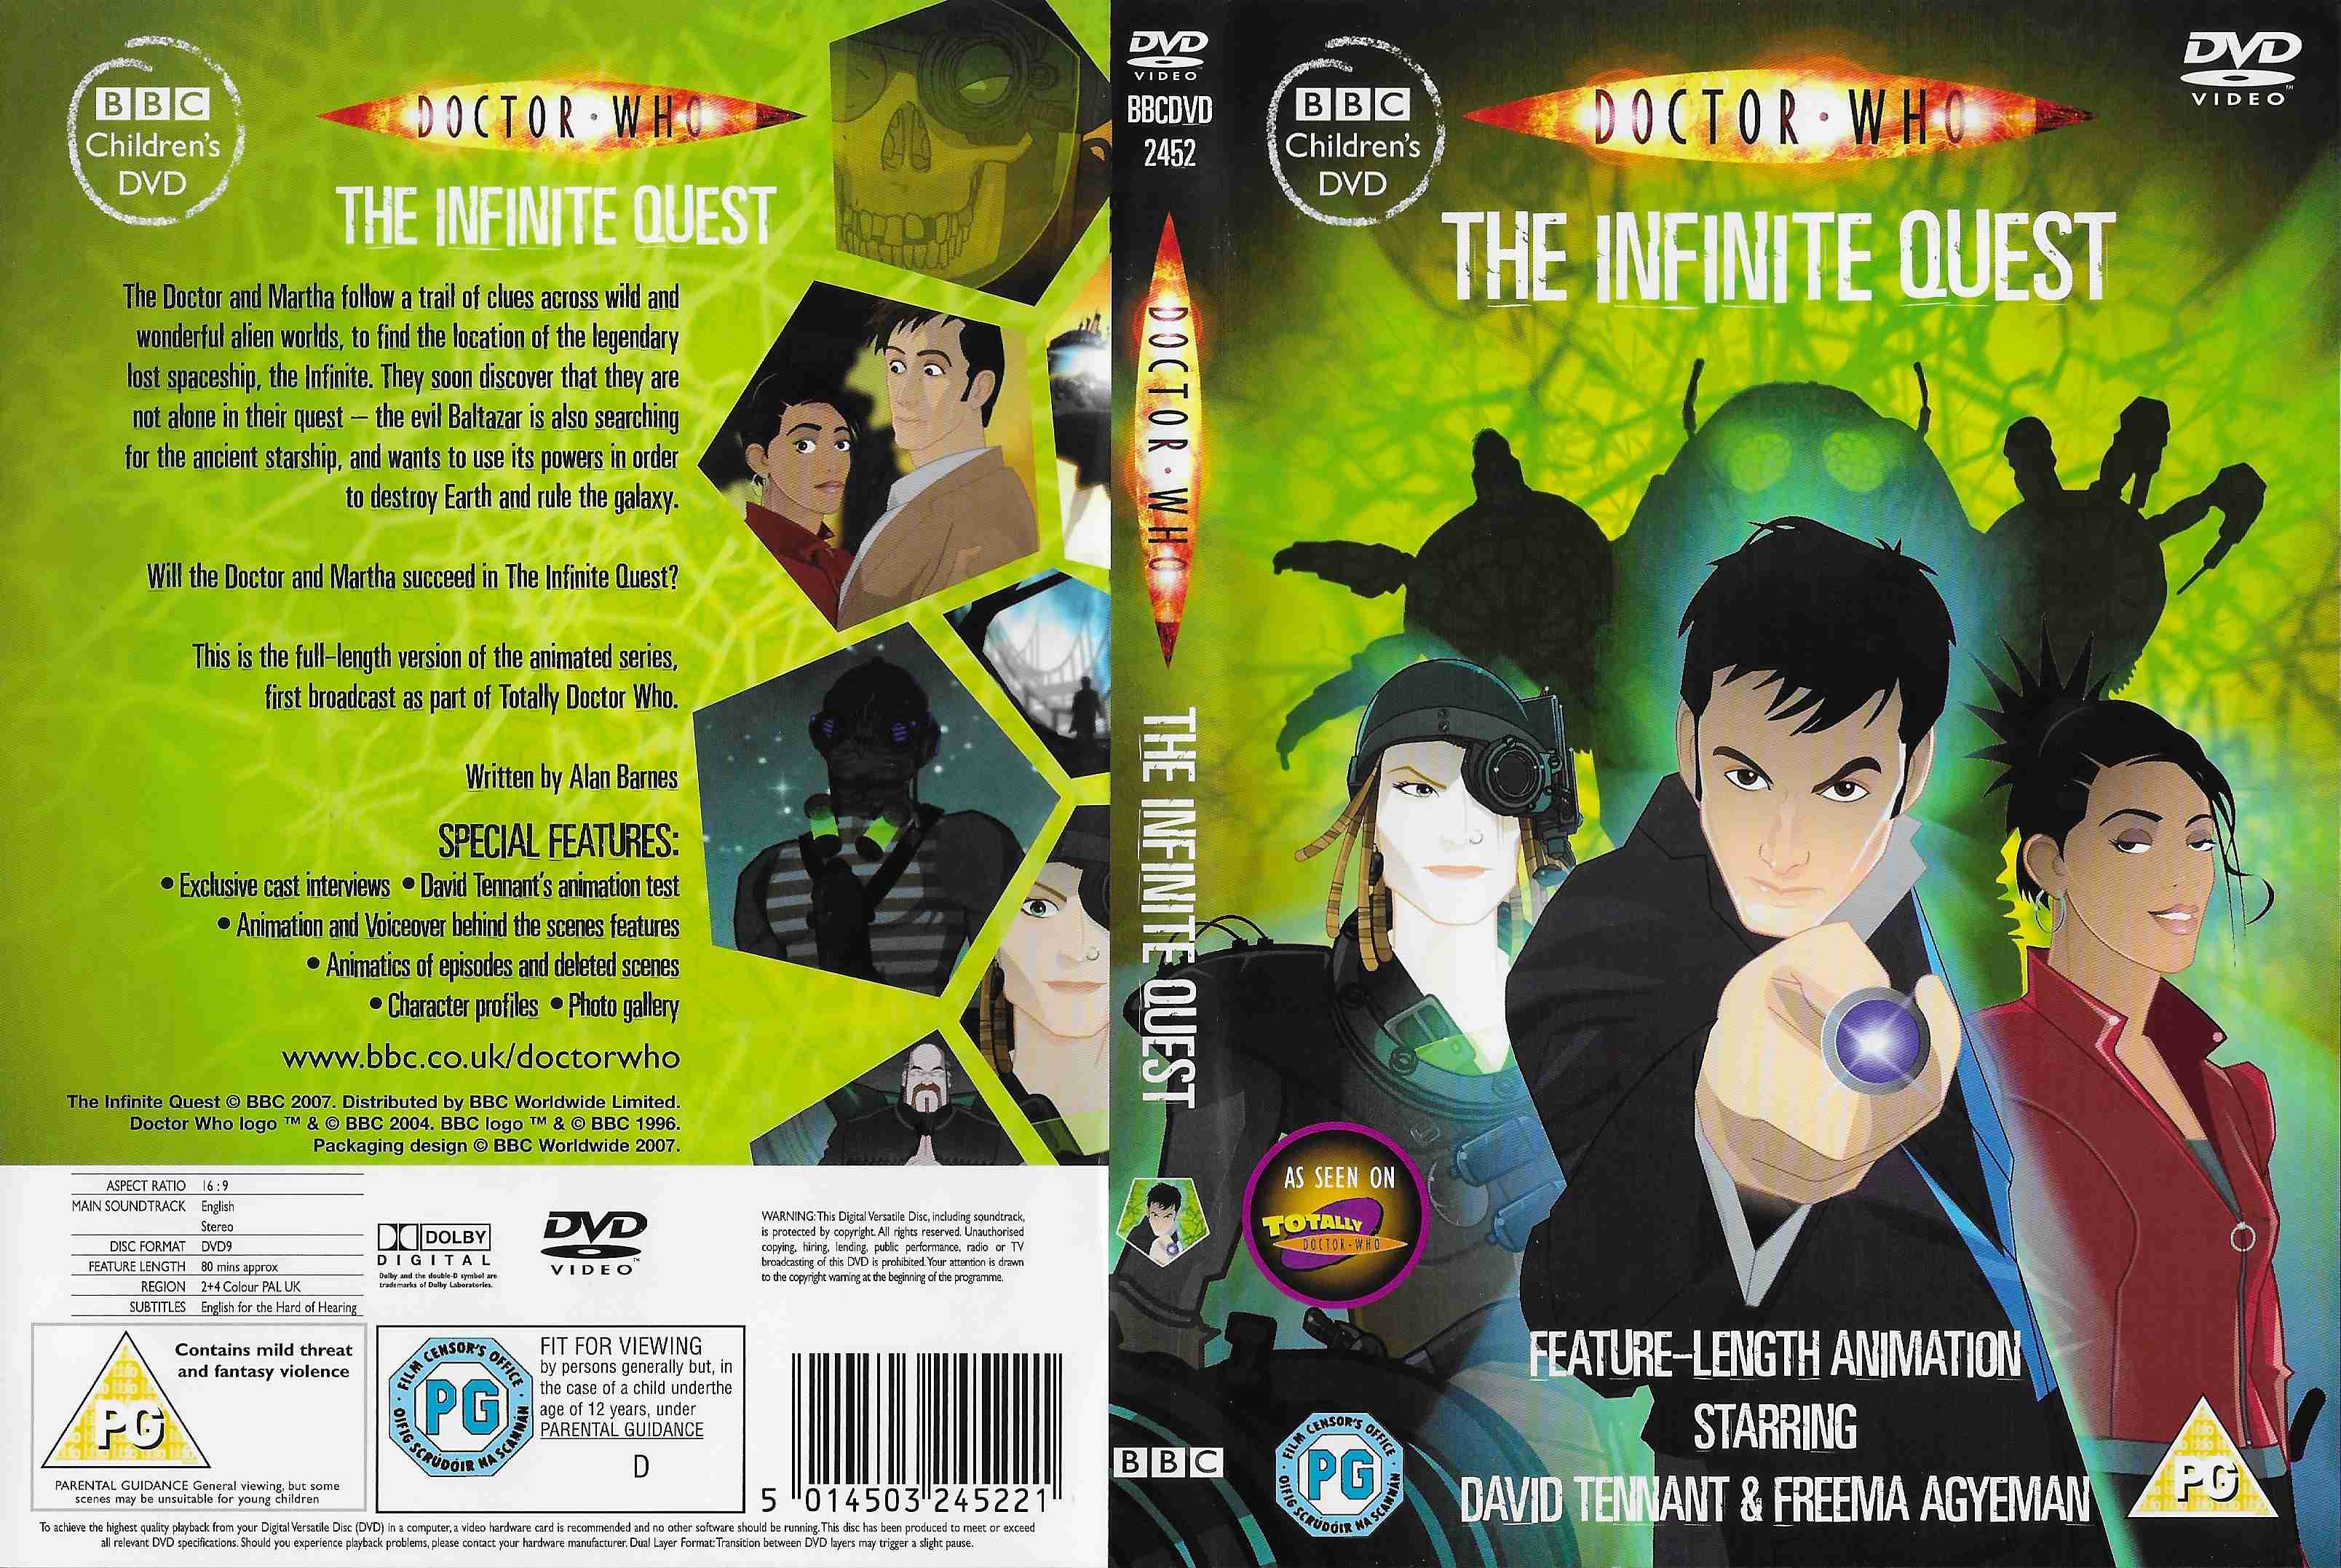 Back cover of BBCDVD 2452